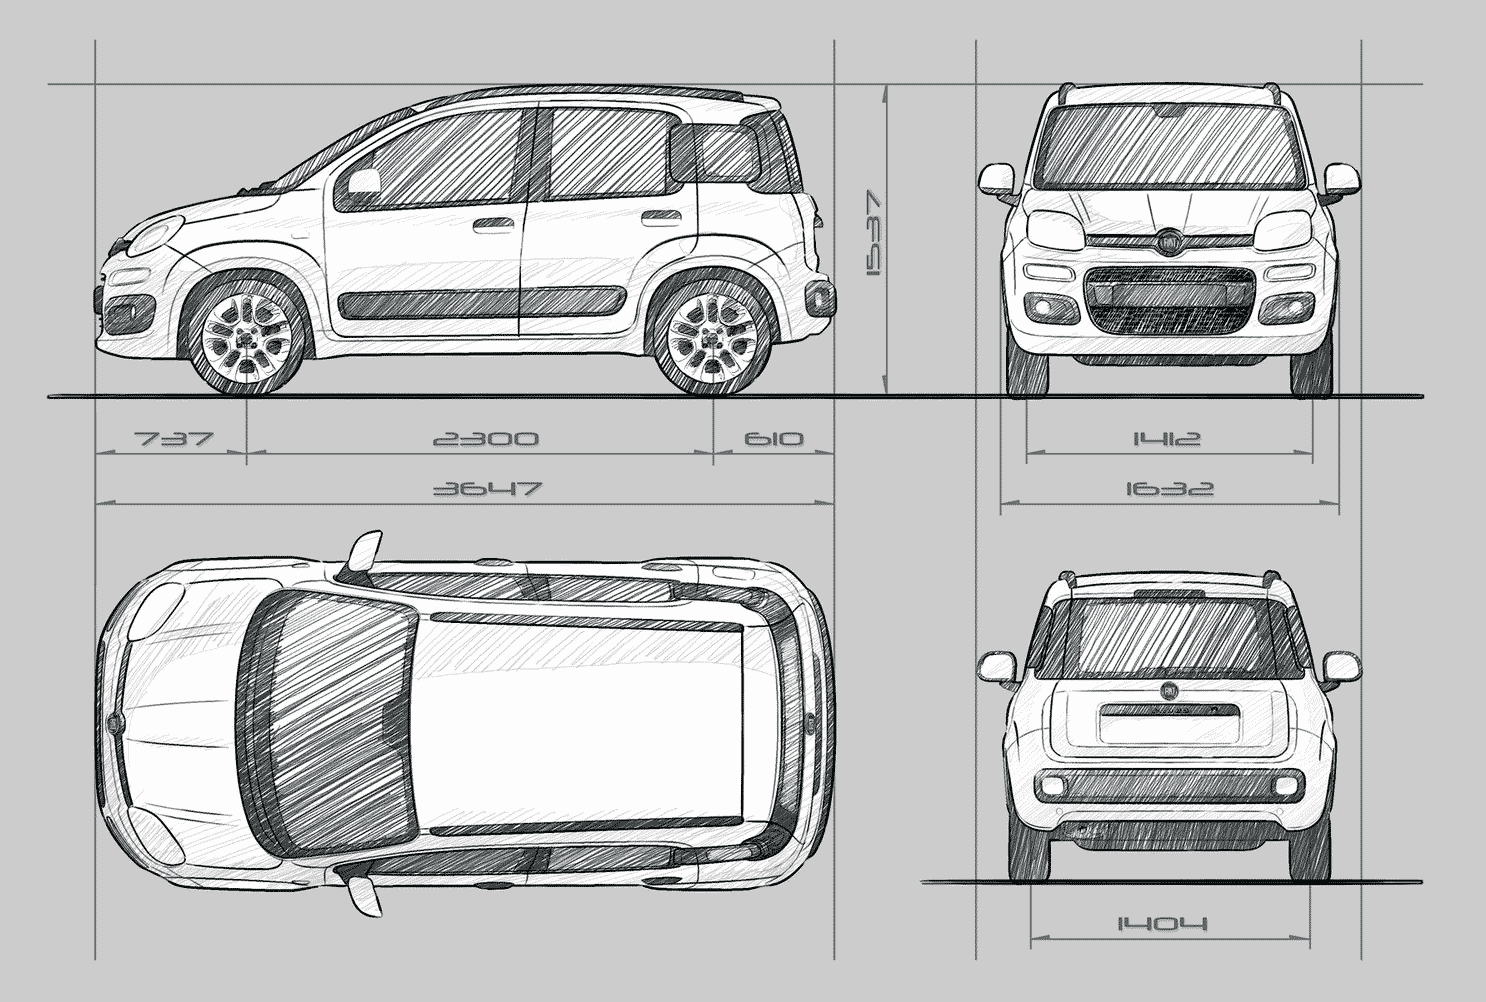 Fiat Panda blueprint